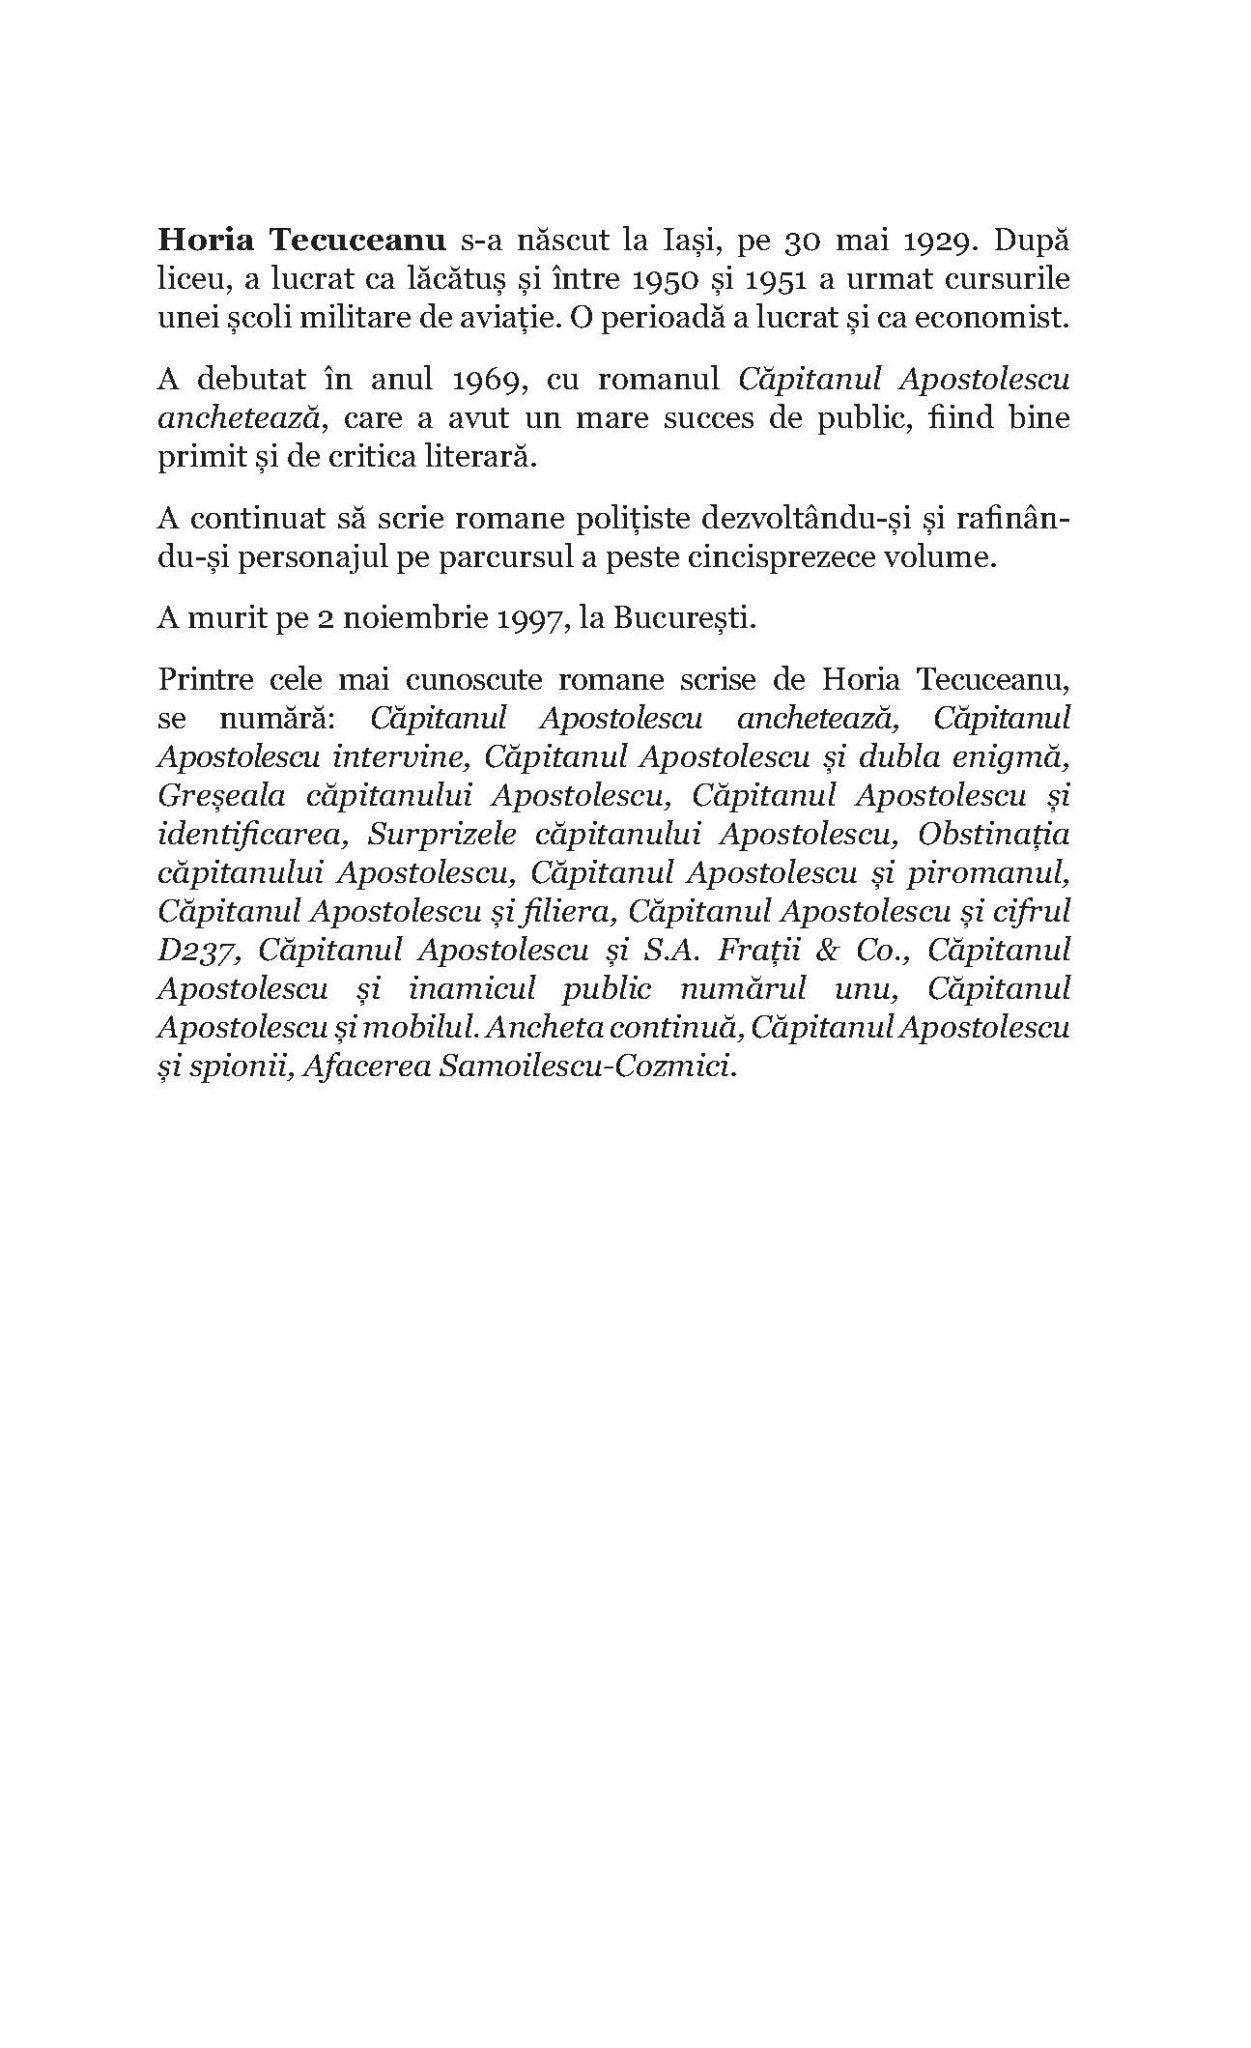 Capitanul Apostolescu si Mobilul. Ancheta Continua - Ed. digitala - PDF - Publisol.ro